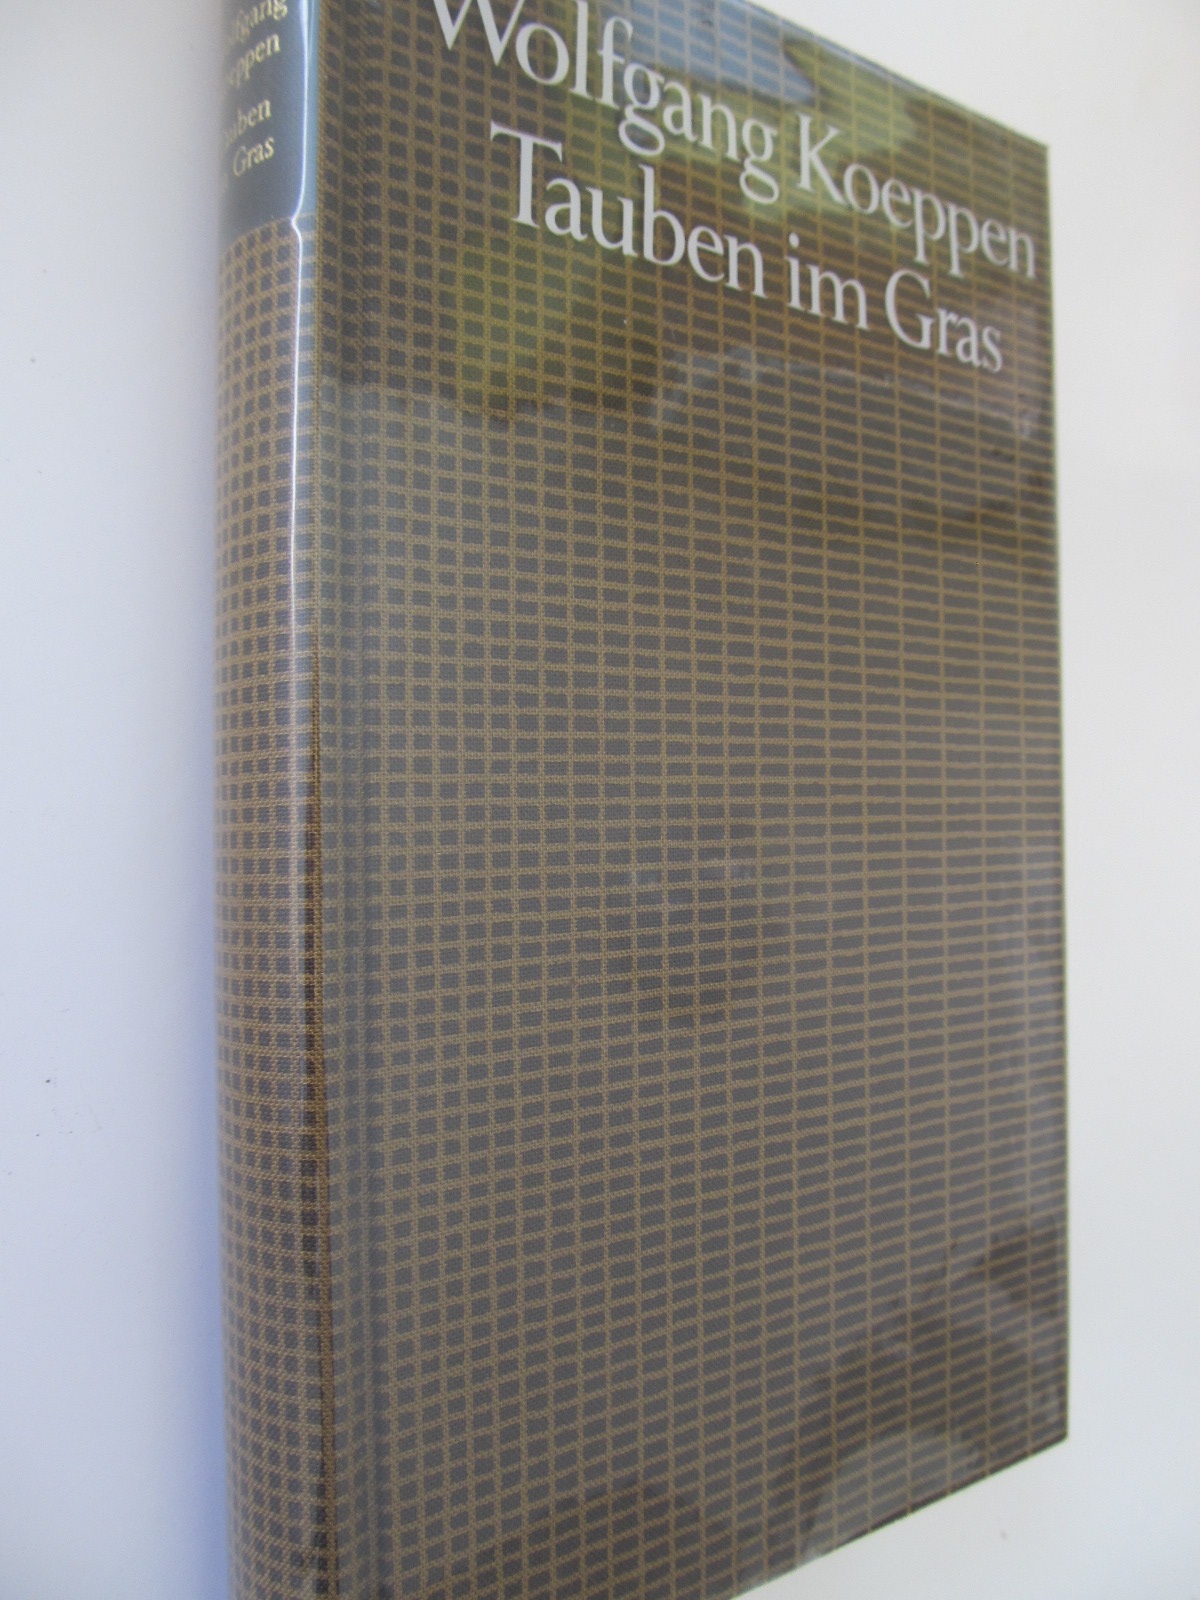 Carte Tauben im Gras - Wolfgang Koeppen